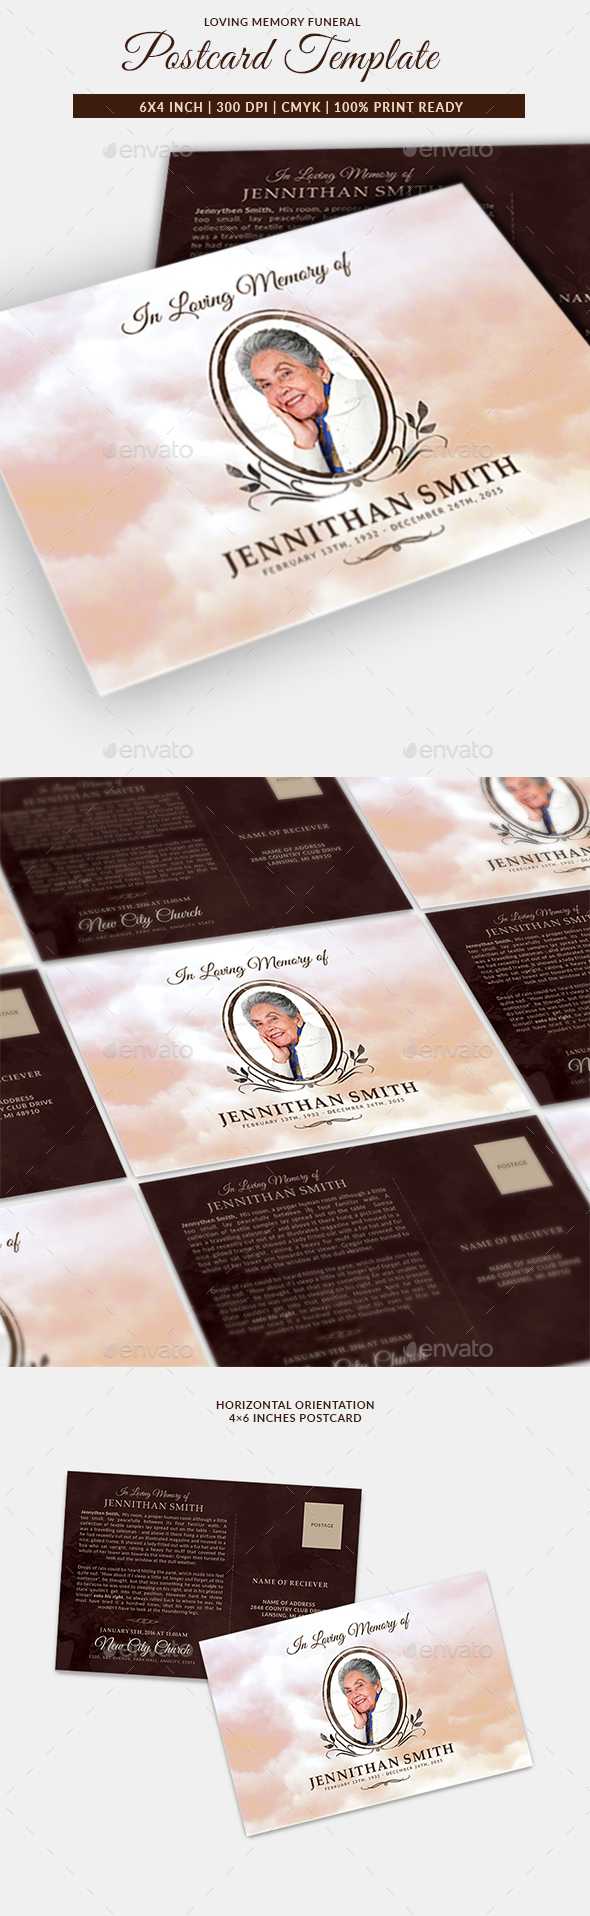 Invitation Postcard Graphics, Designs & Templates Inside Funeral Invitation Card Template